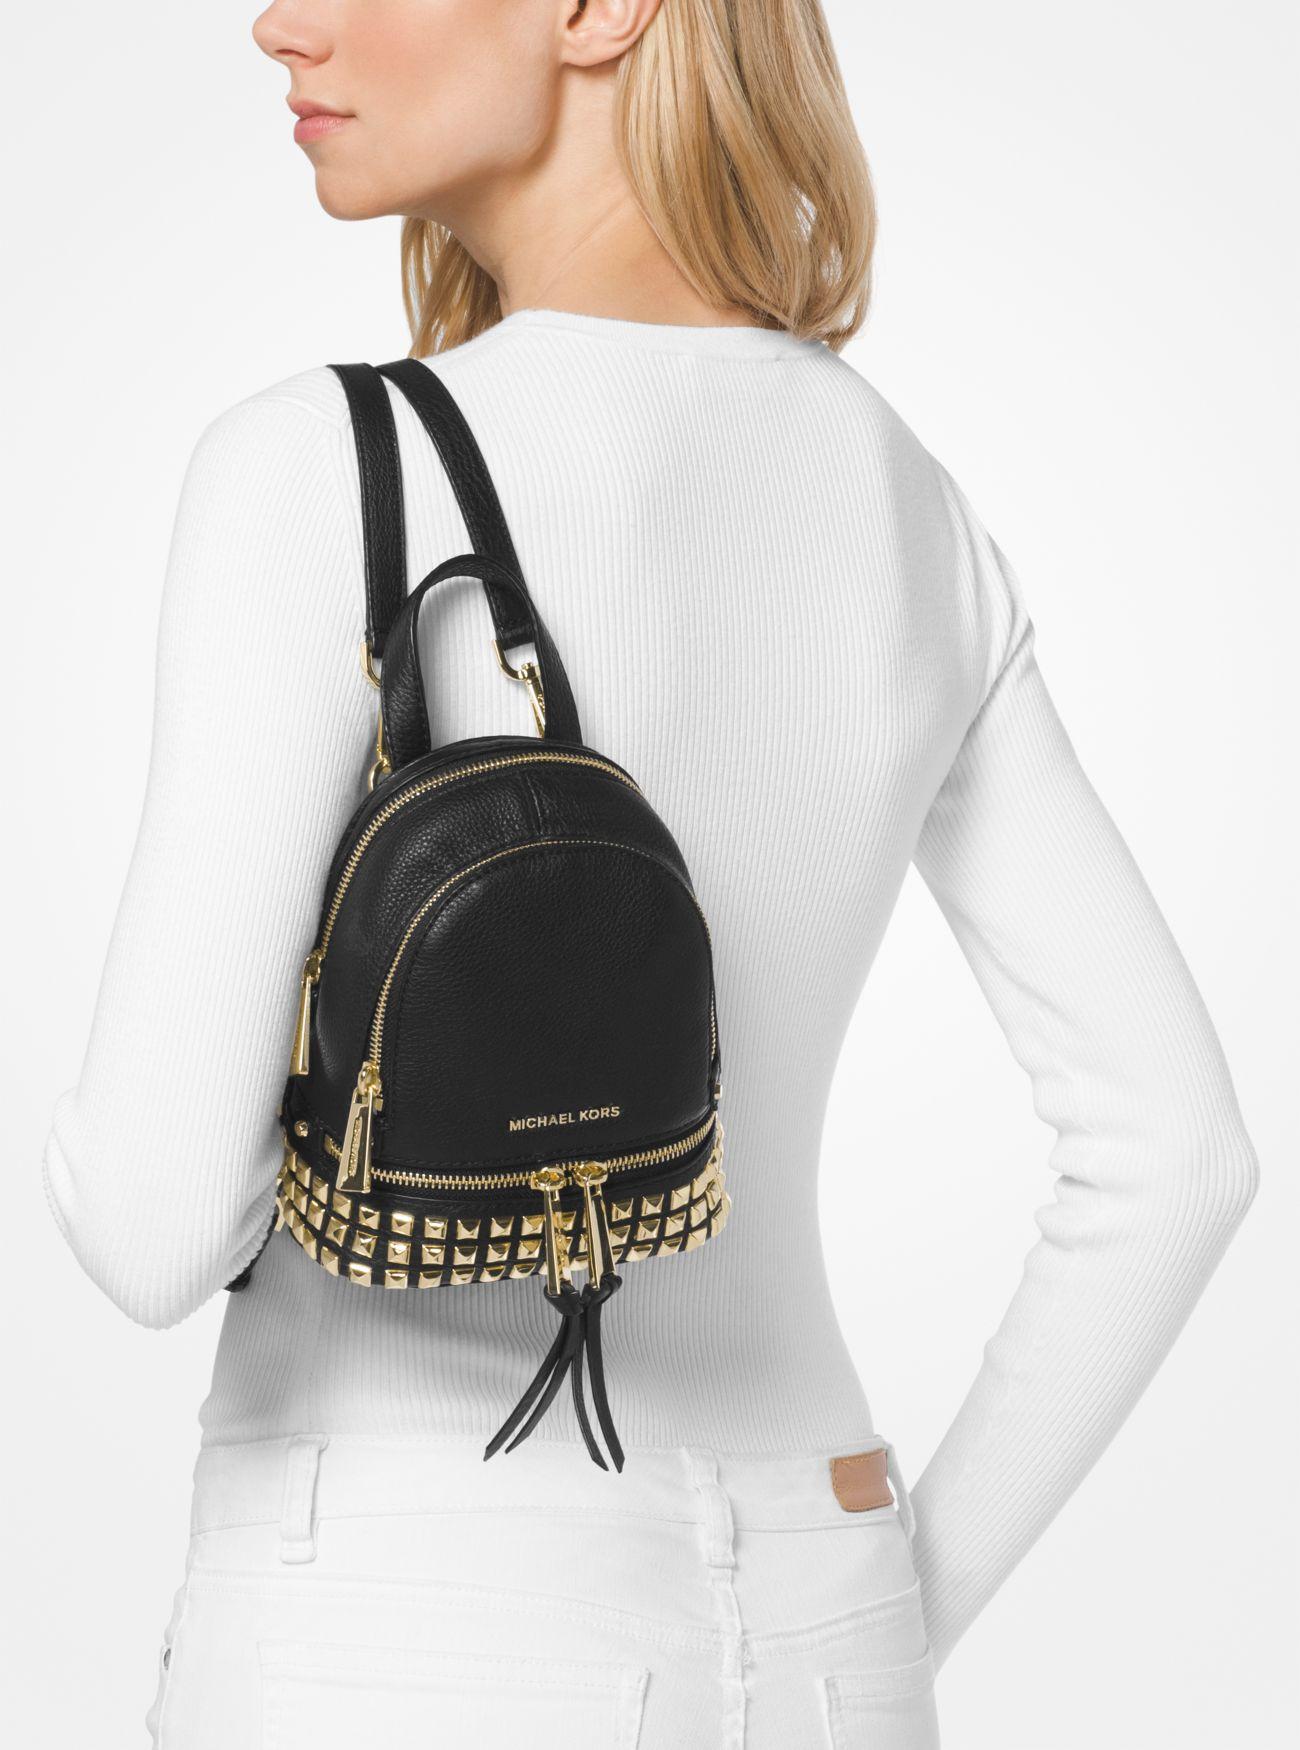 Michael Kors Rhea Mini Studded Leather Backpack in Black | Lyst